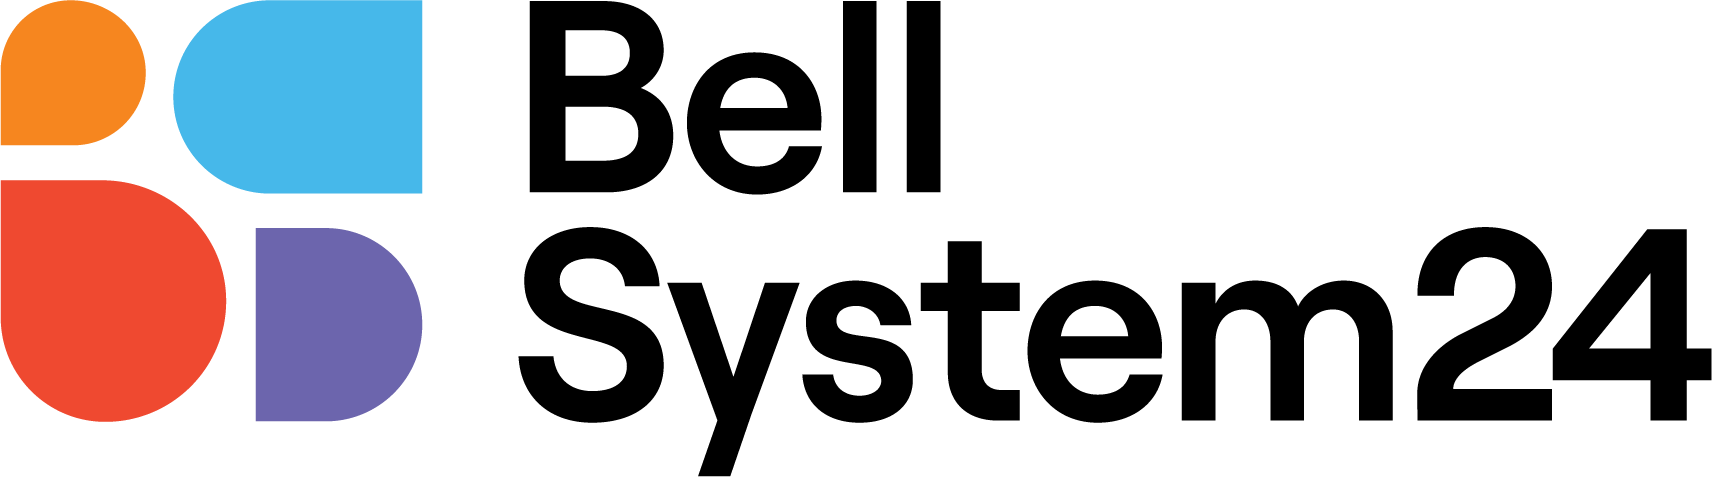 Bell System24